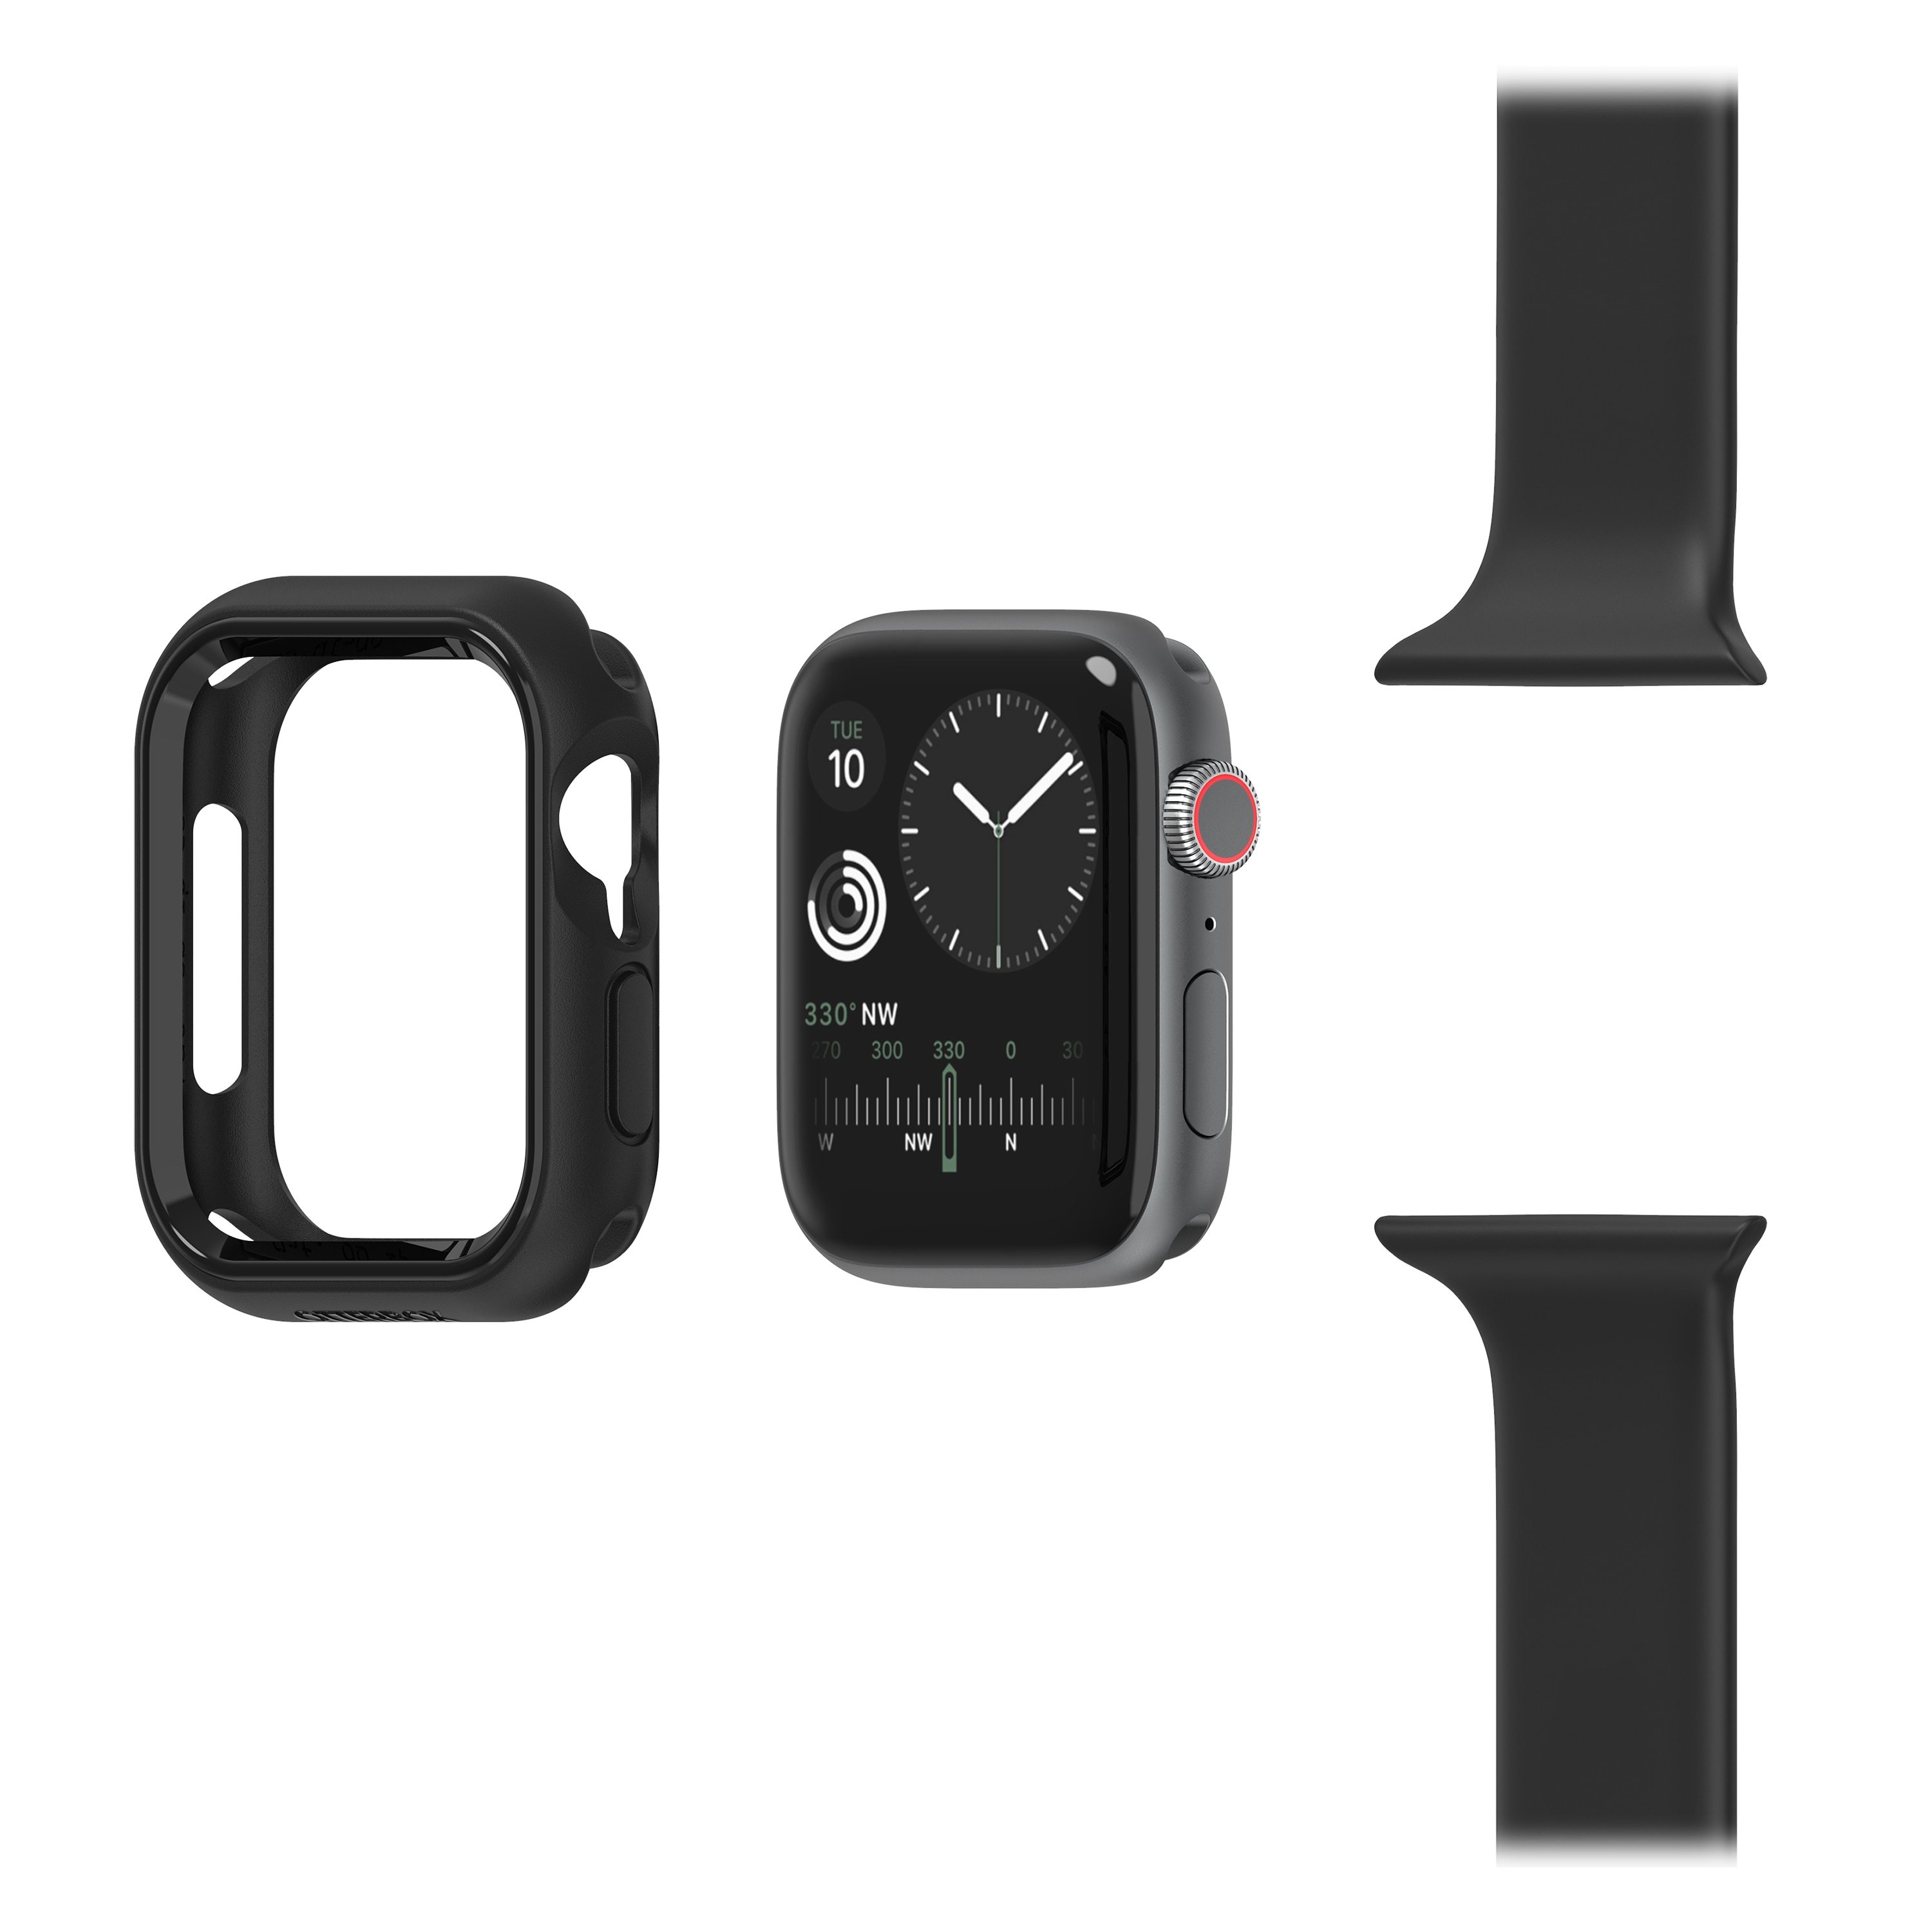 Exo Edge Hülle Apple Watch SE 44mm schwarz